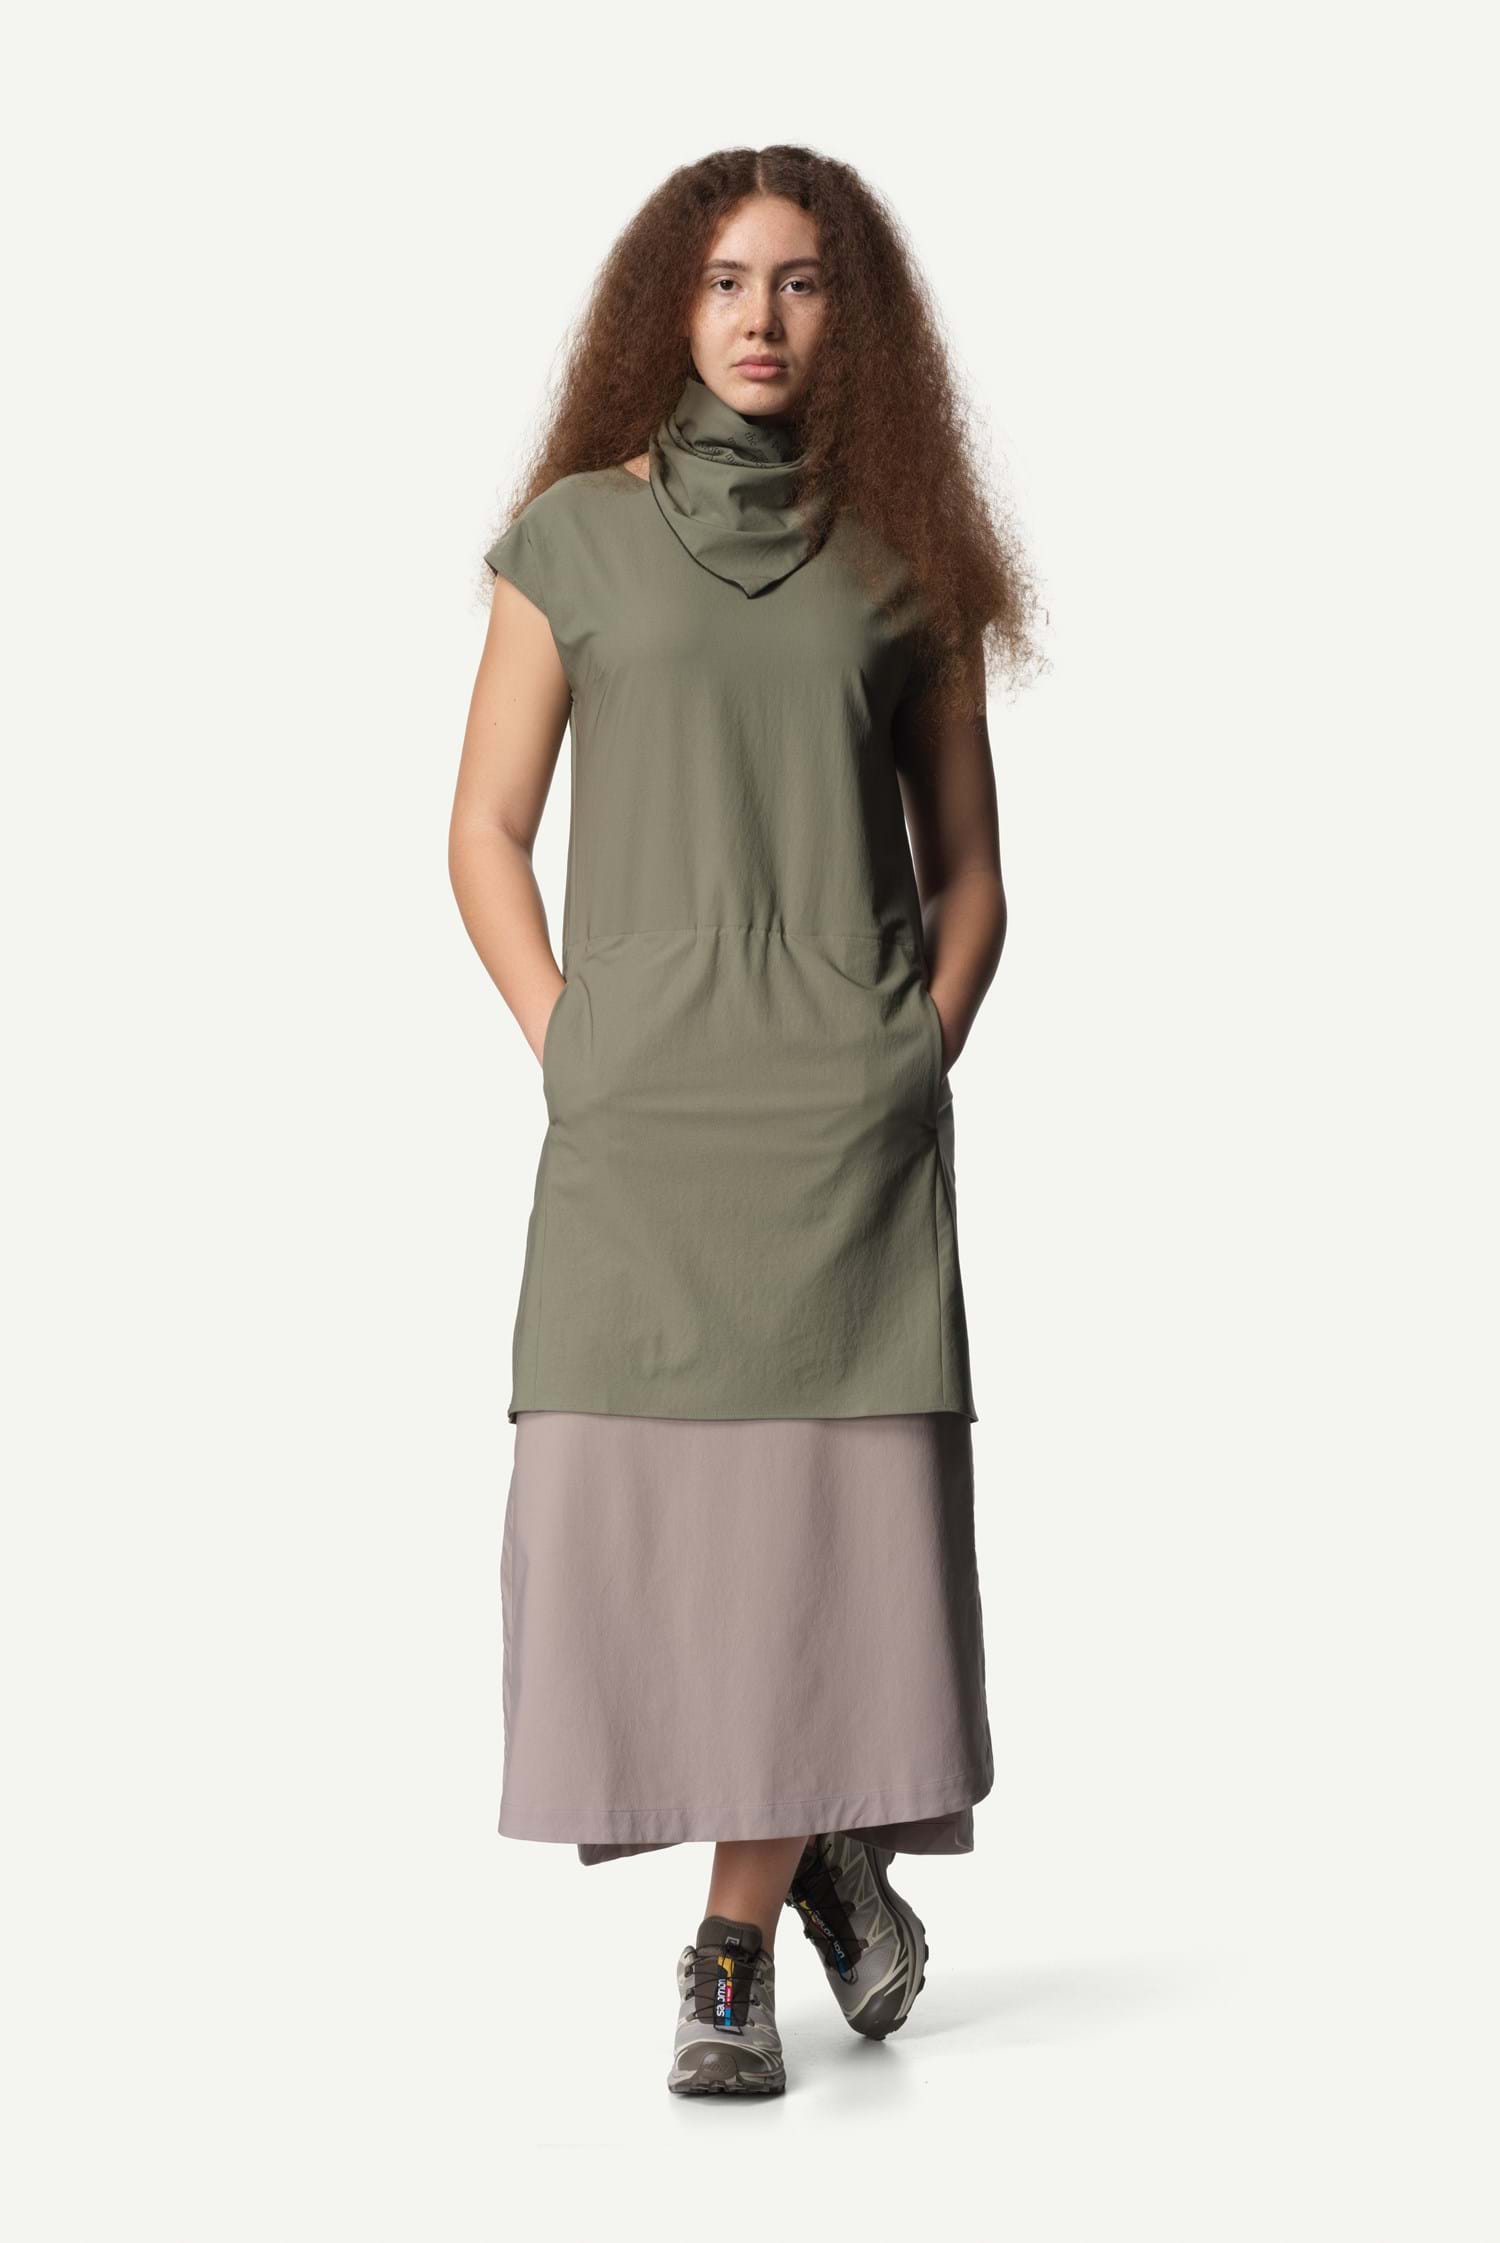 Produktfoto för Houdini W's Dawn Dress, Sage Green, XL